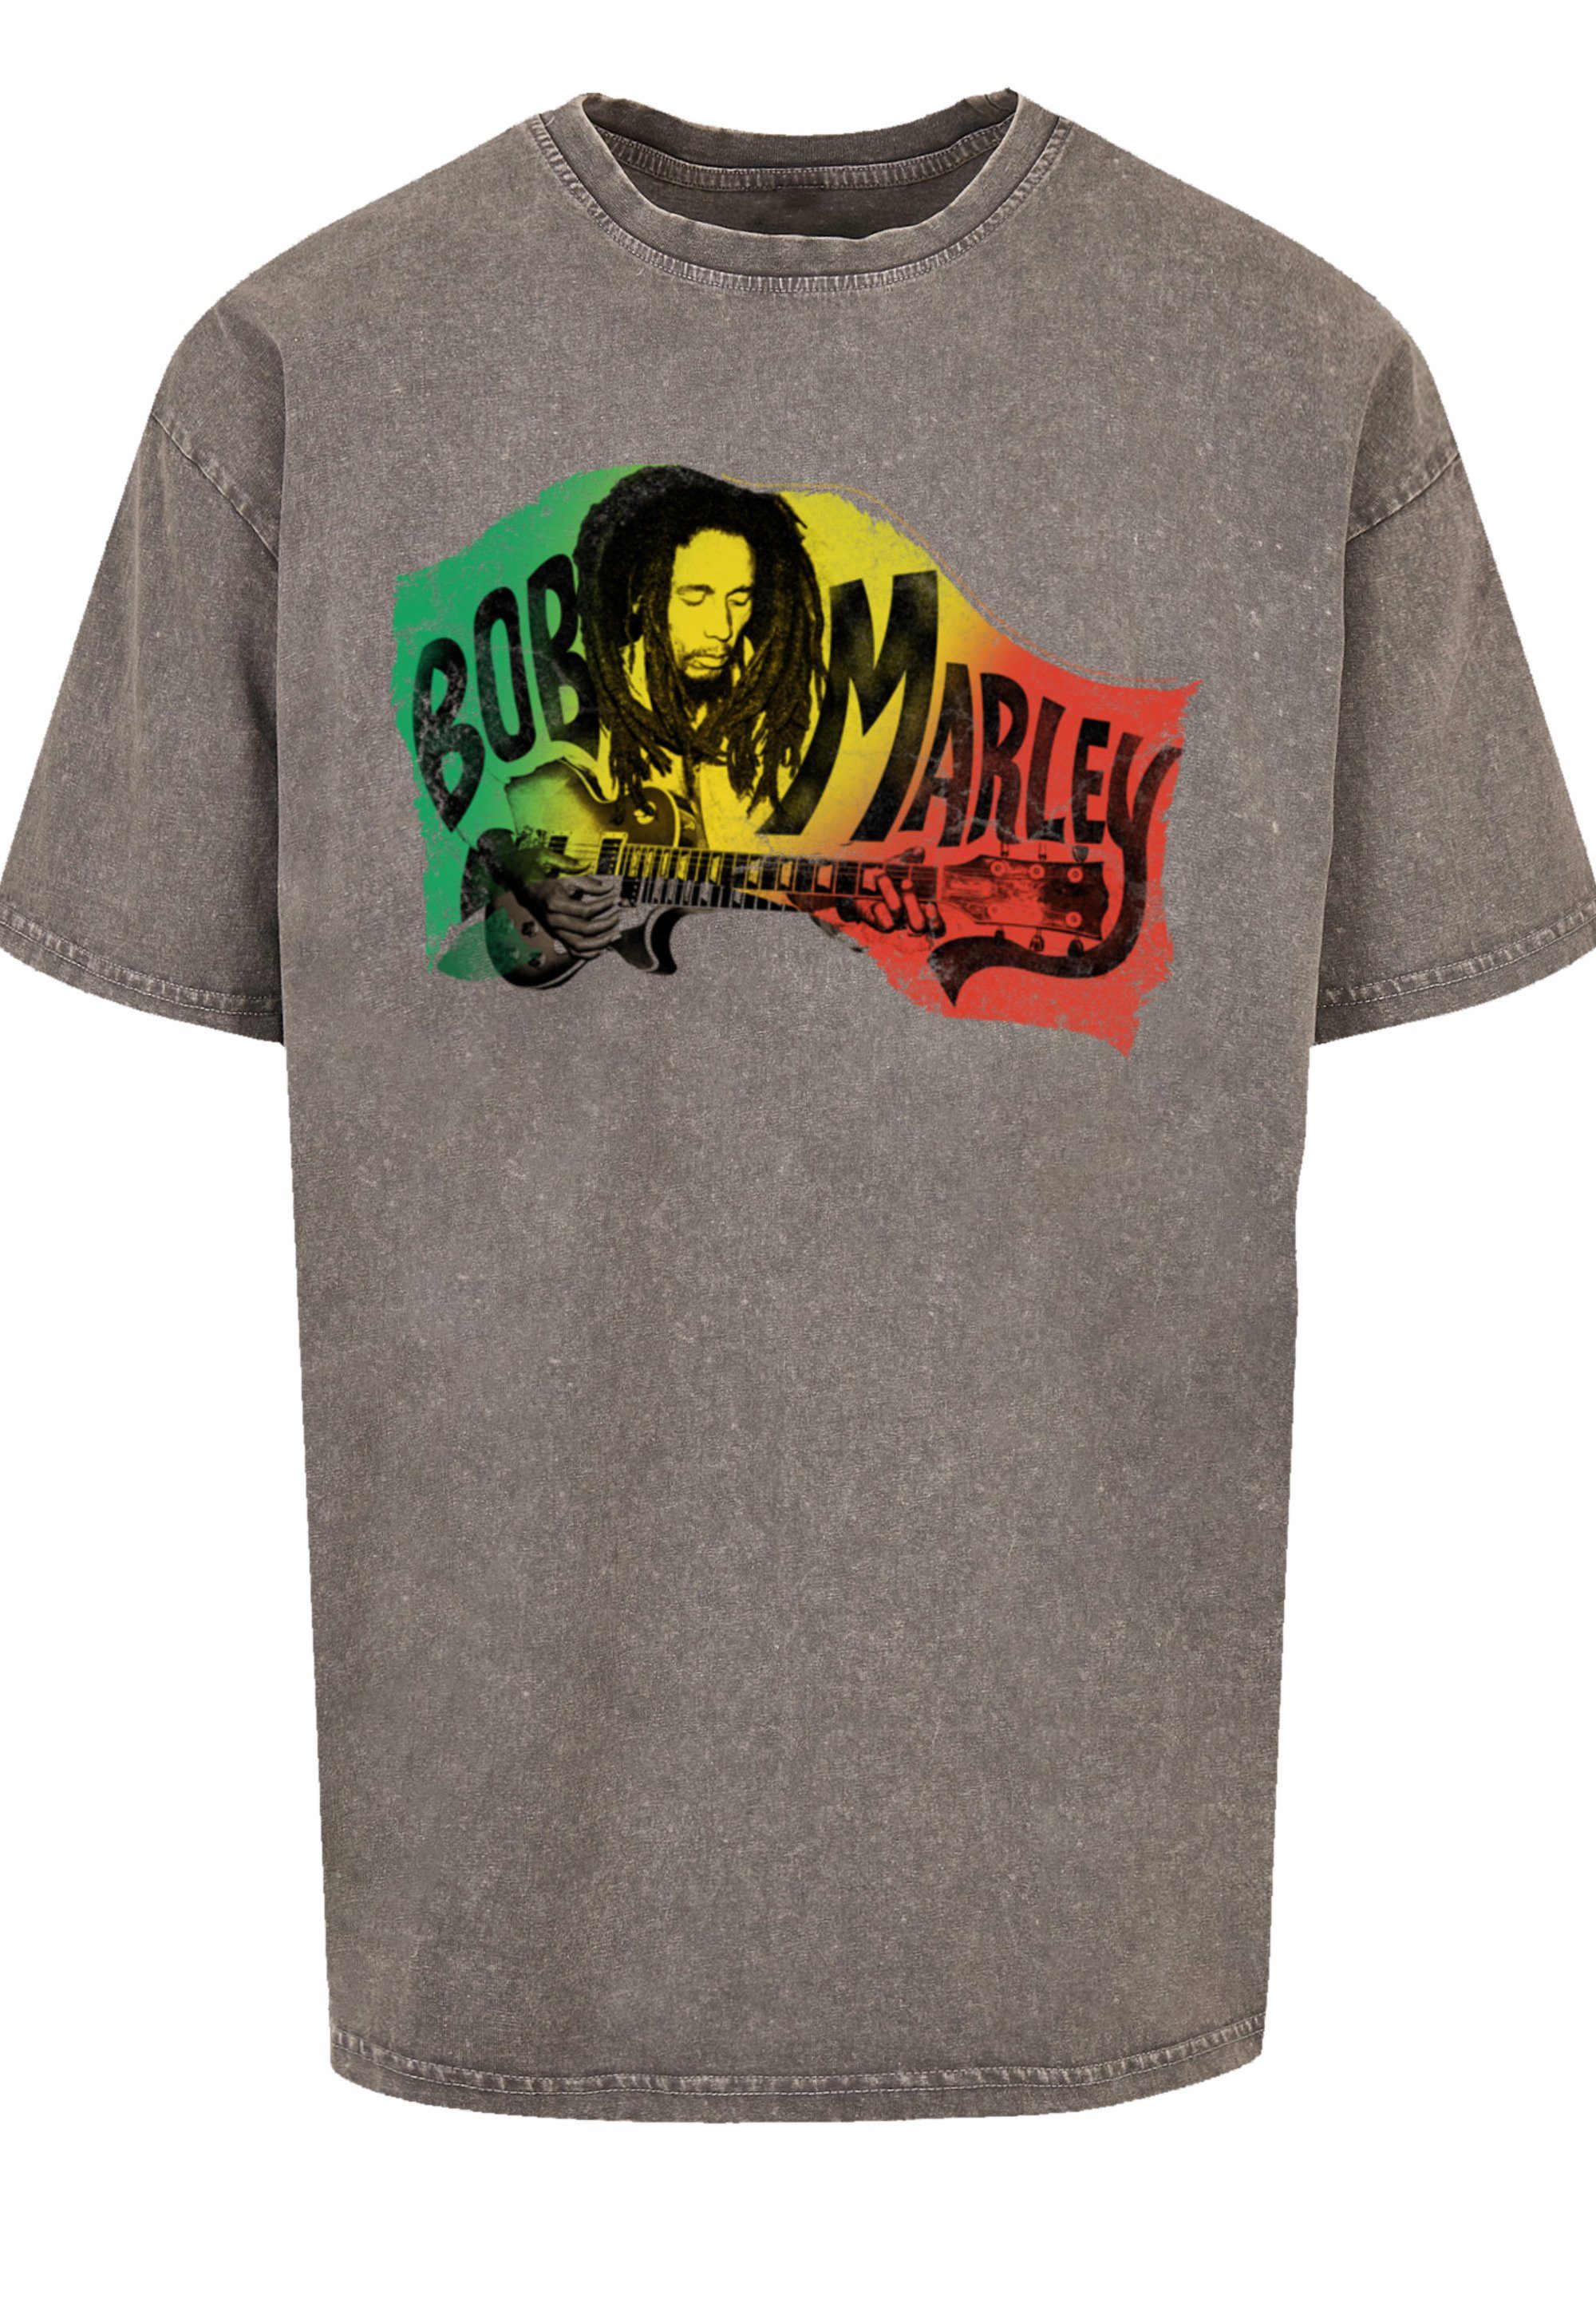 By Musik, Music Premium Chords Qualität, F4NT4STIC Rock Asphalt T-Shirt Marley Off Reggae Bob